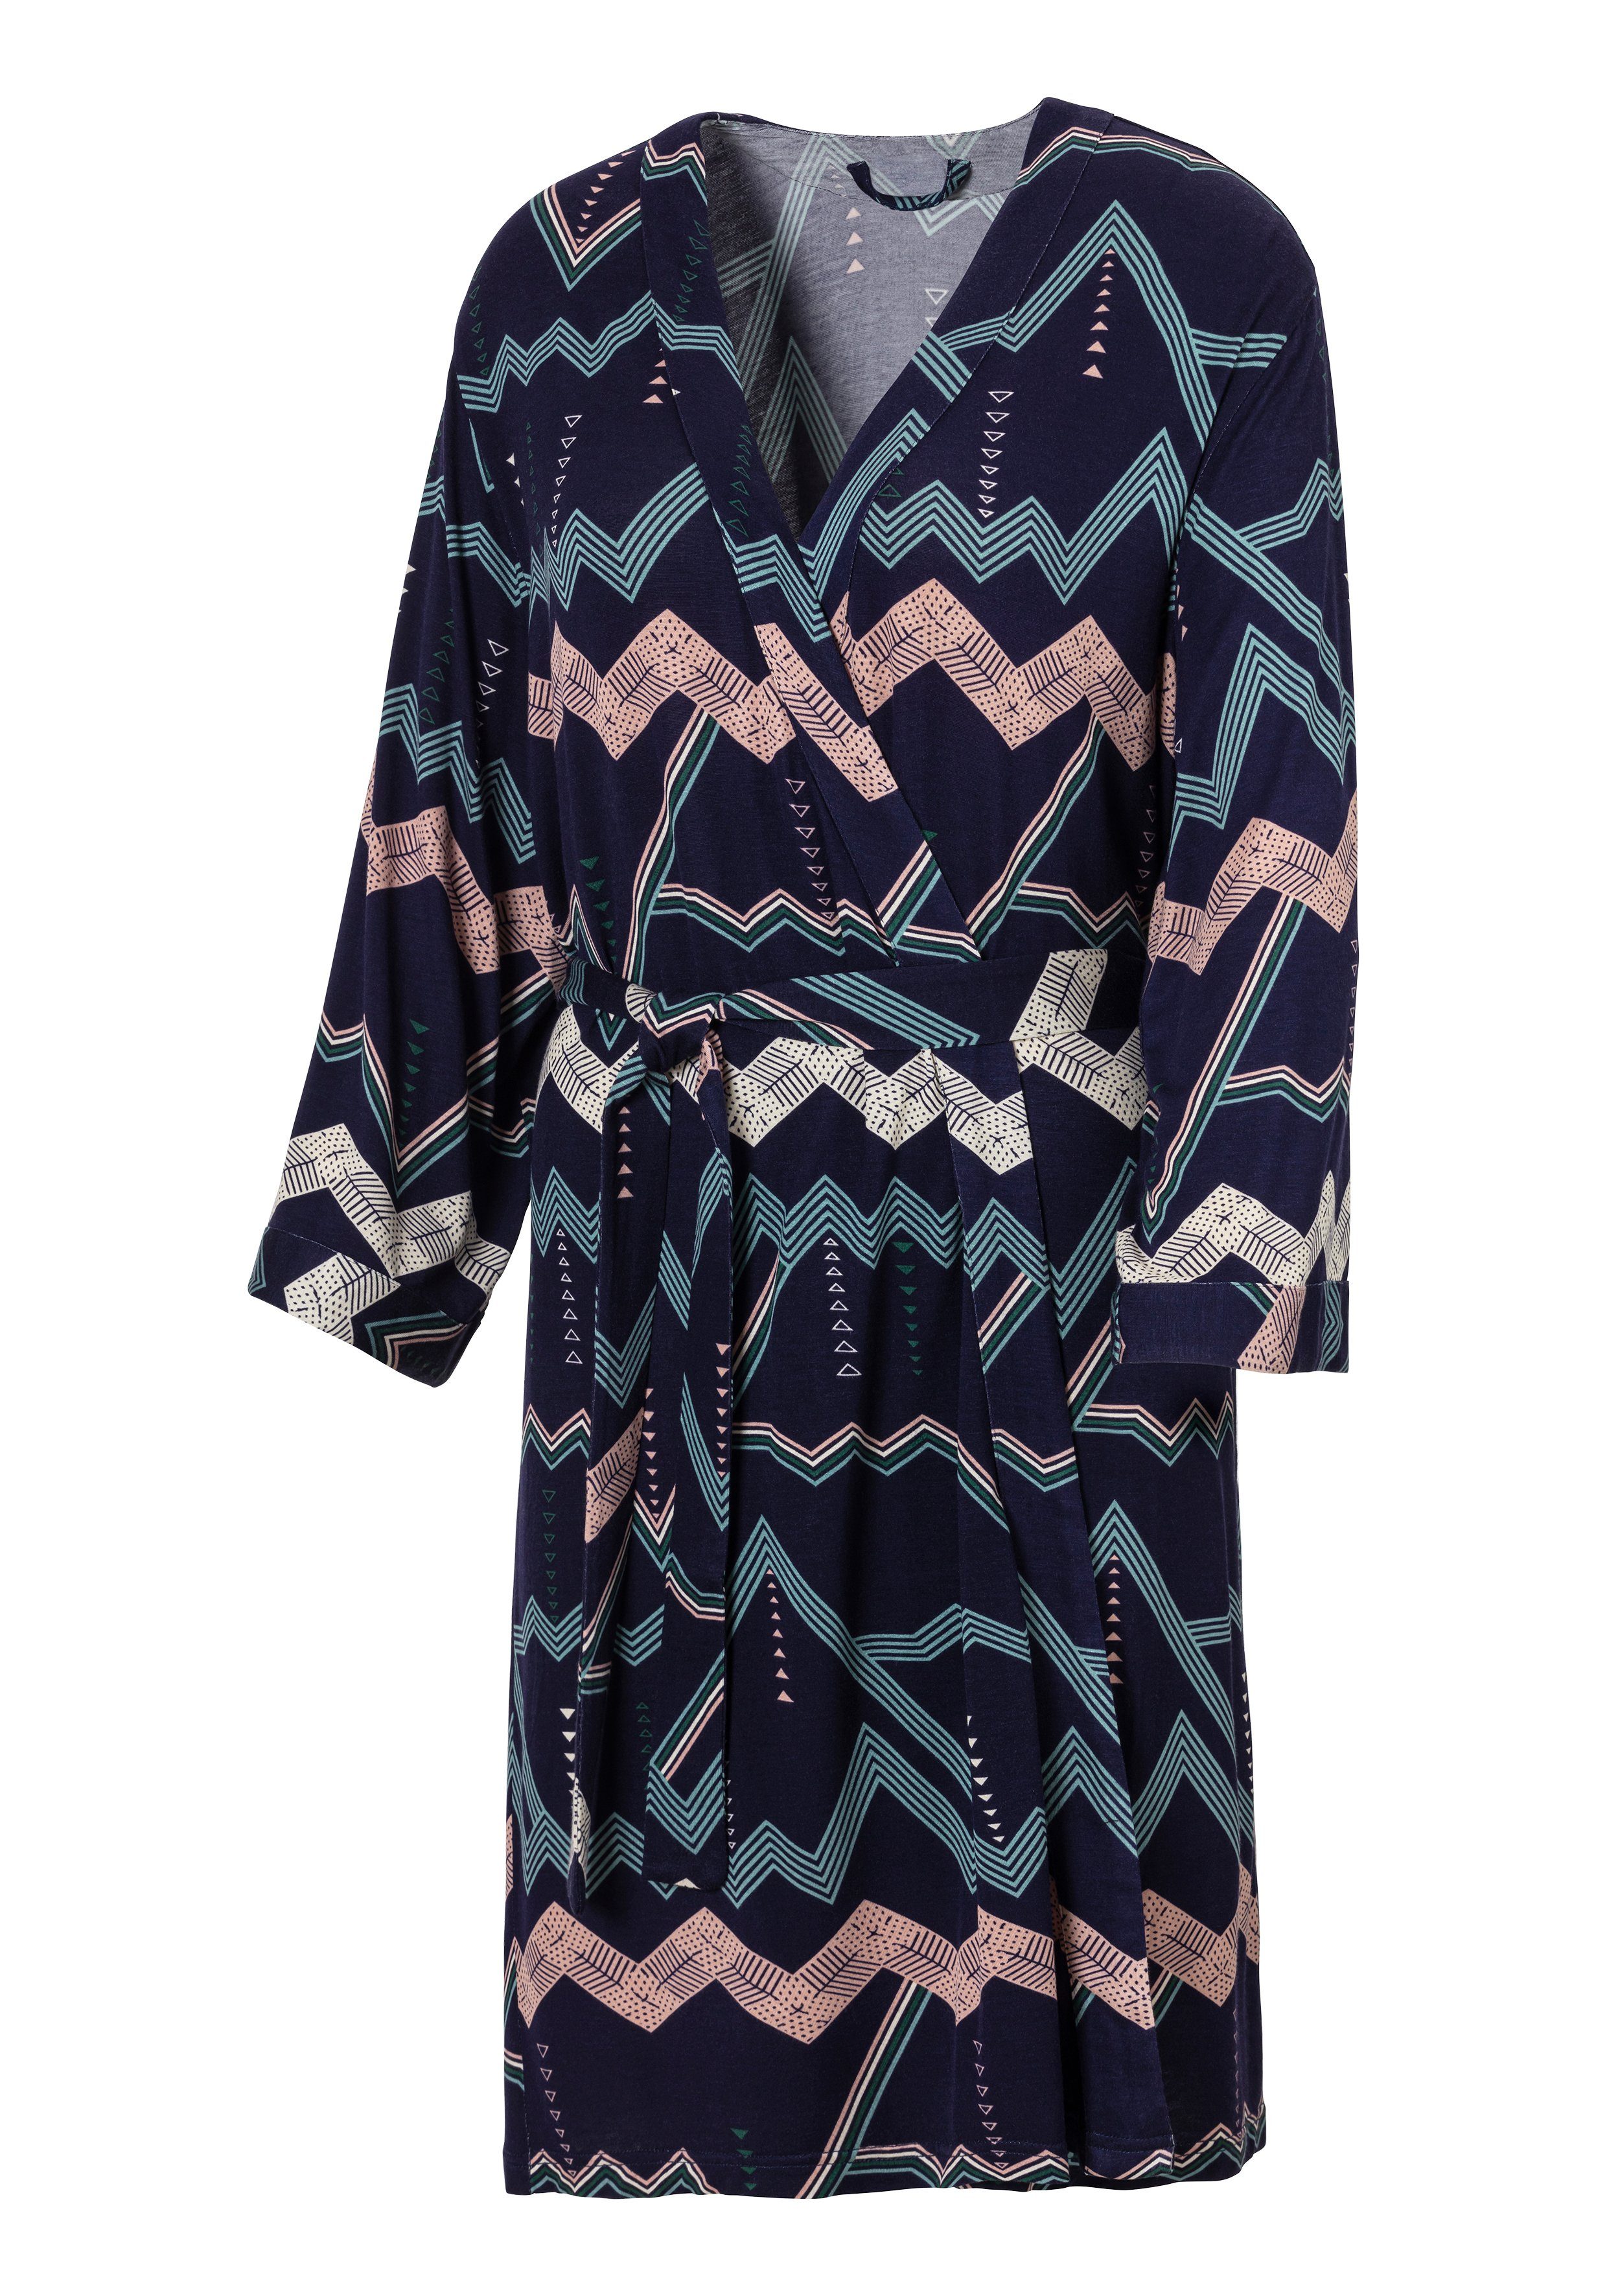 LASCANA Kimono, Kurzform, dunkelblau Muster Zick-Zack Viskose, Gürtel, grafischem mit